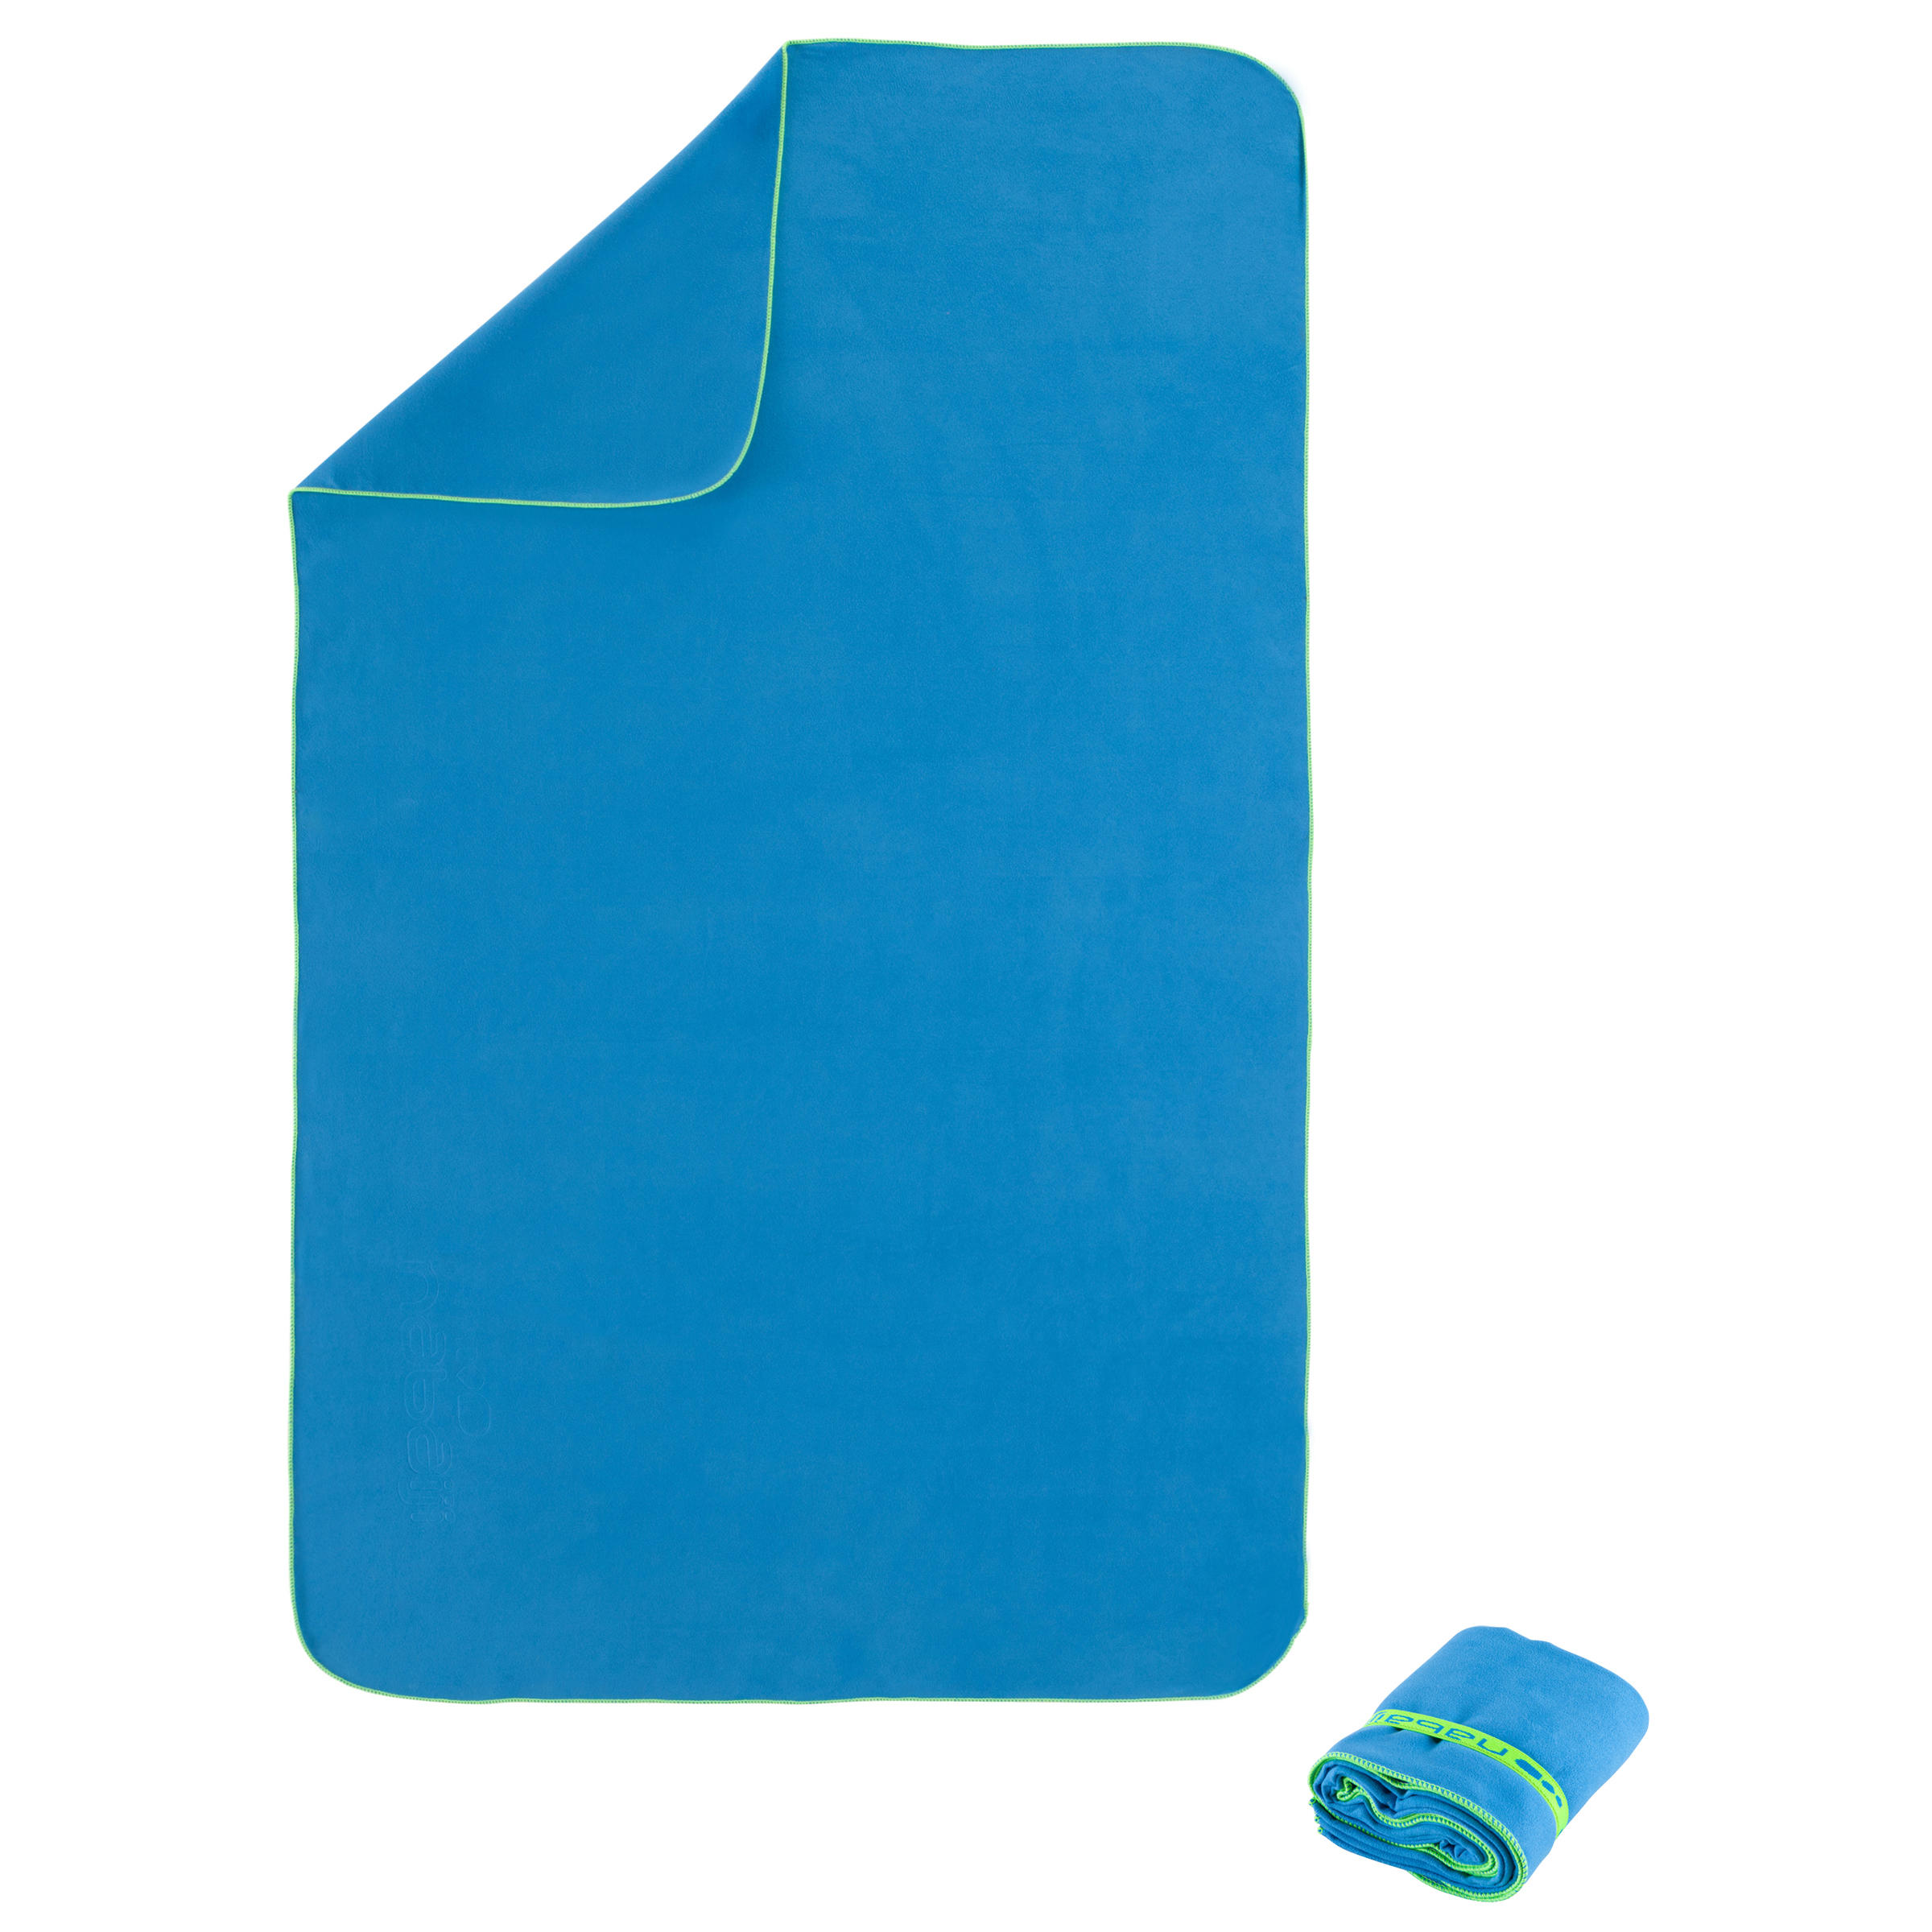 Flip Microfiber Sports & Travel Towel Blue 80 x 160 cm Sealed New £9.49 Fit 